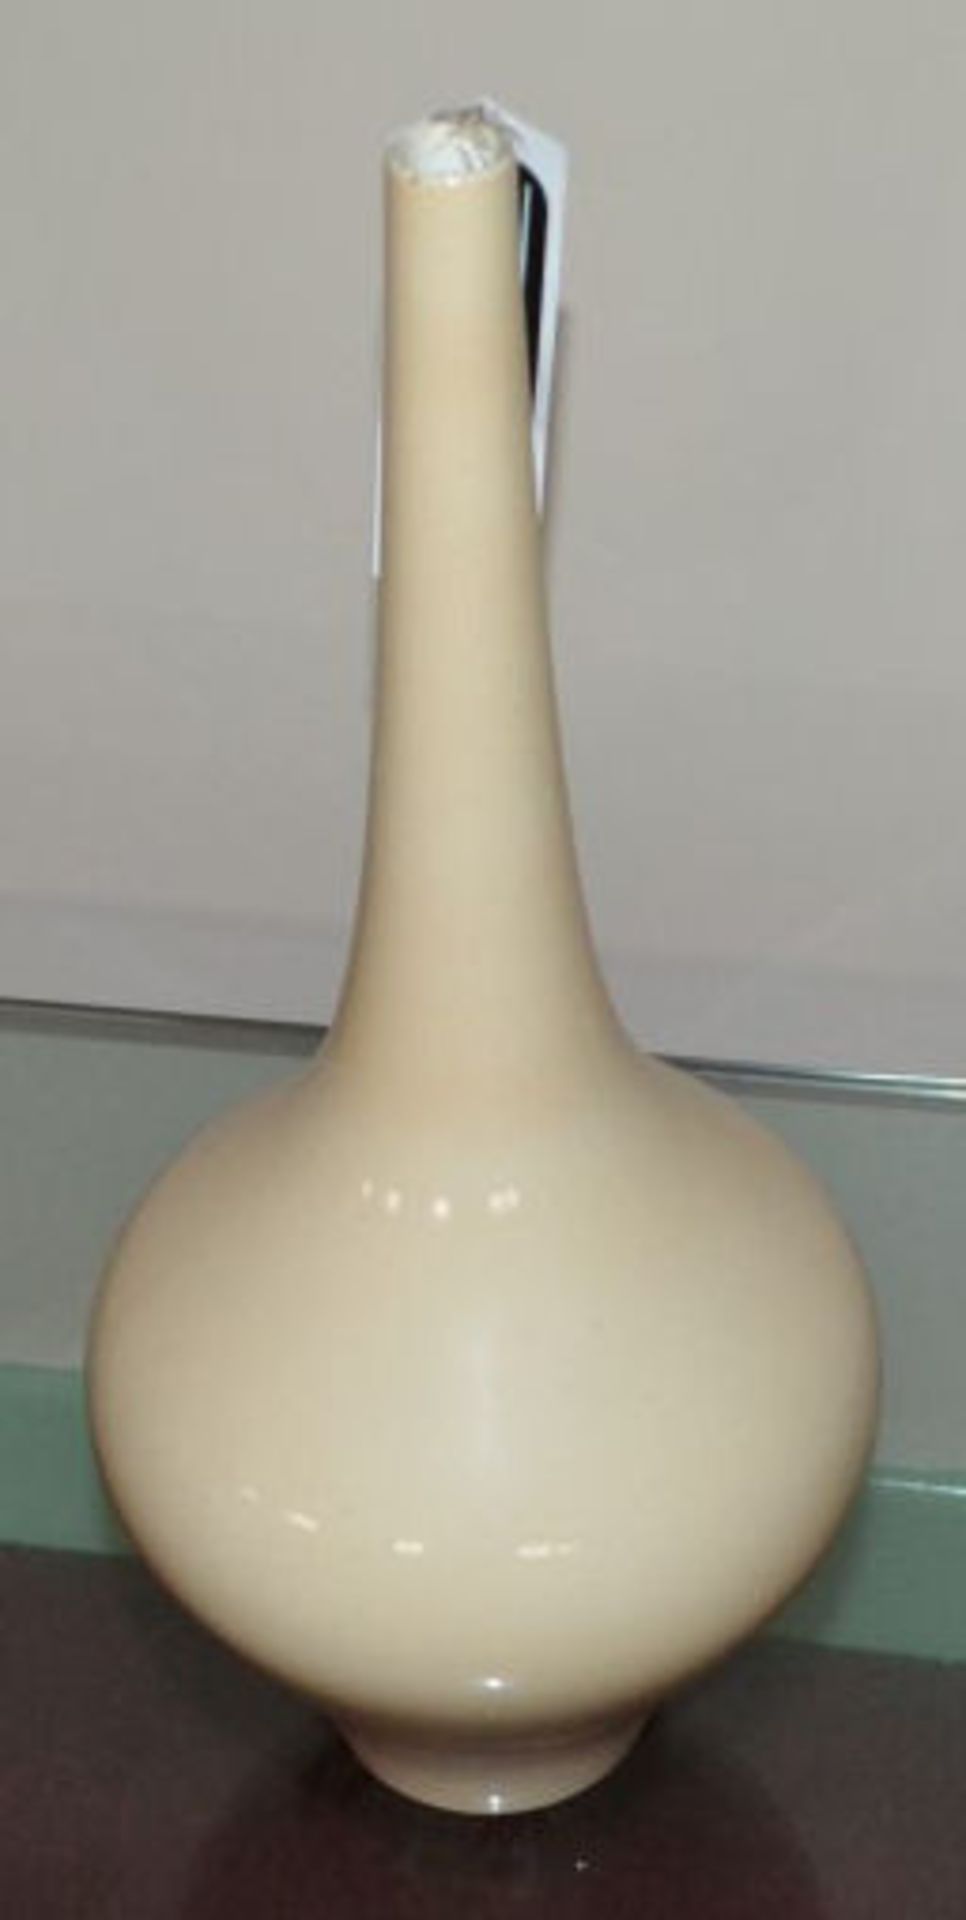 1 x Cream Coloured Vase. Total Height 51.5cm. - Image 3 of 3